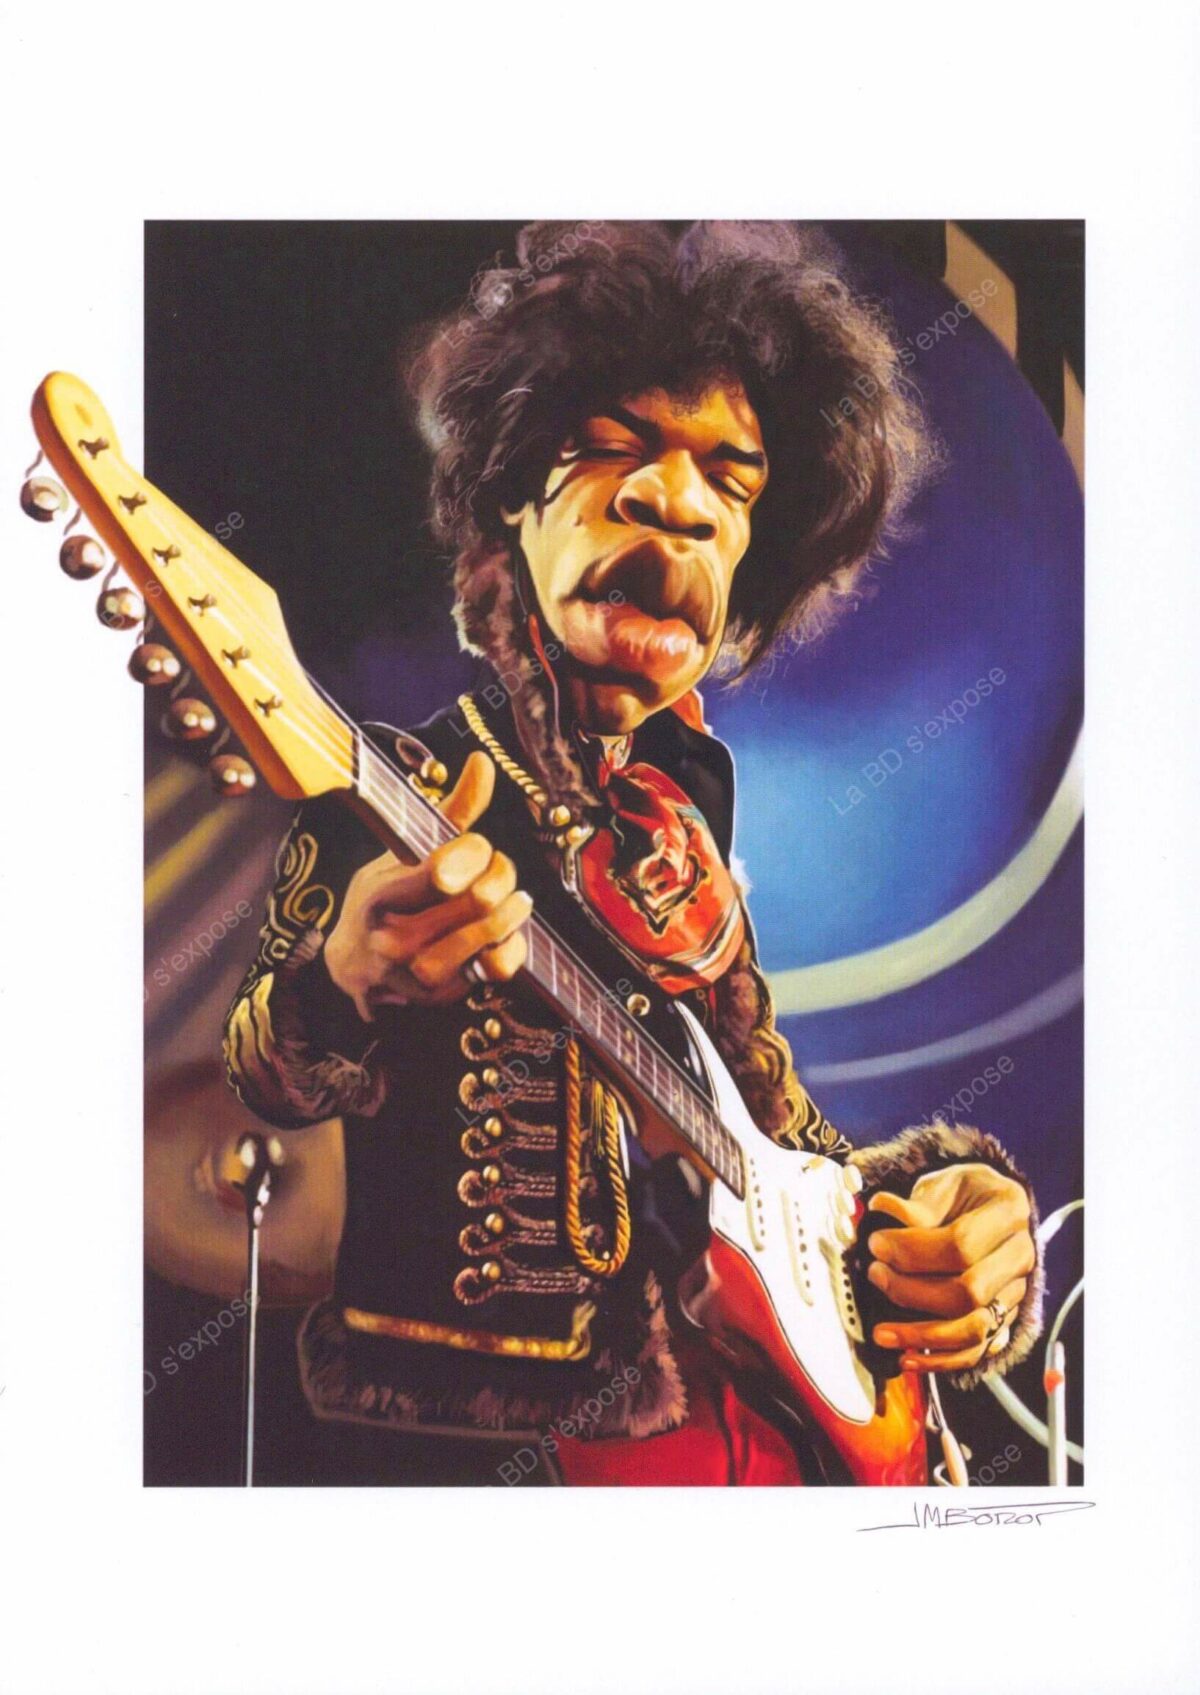 Les collectionnables Jimi Hendrix Jean Marc Borot La BD s'expose